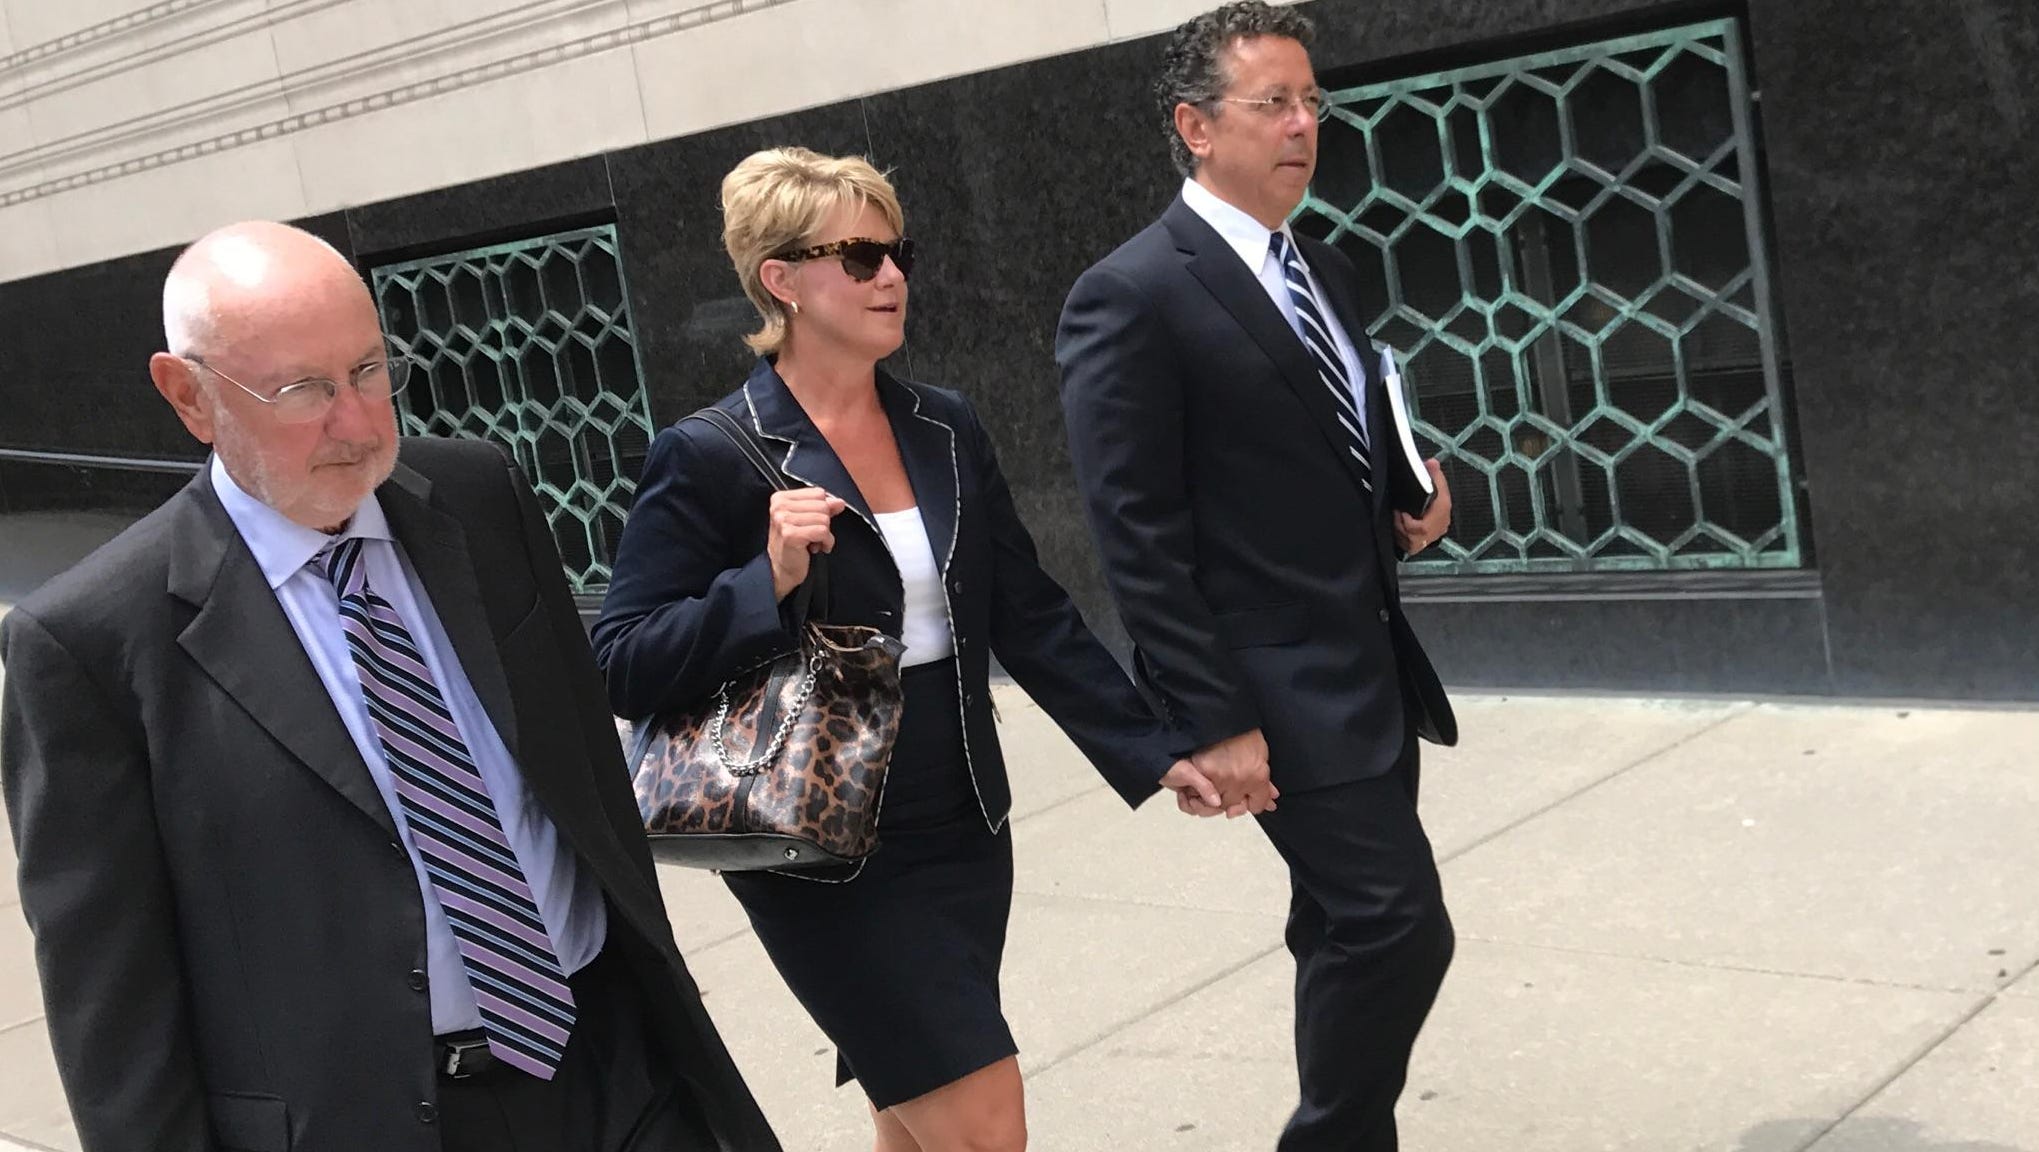 Alphons Iacobelli, far right, leaves the U.S. District Court in Detroit on August 1, alongside Susanne Piwinski-Iacobelli and his lawyer David DuMouchel, left.